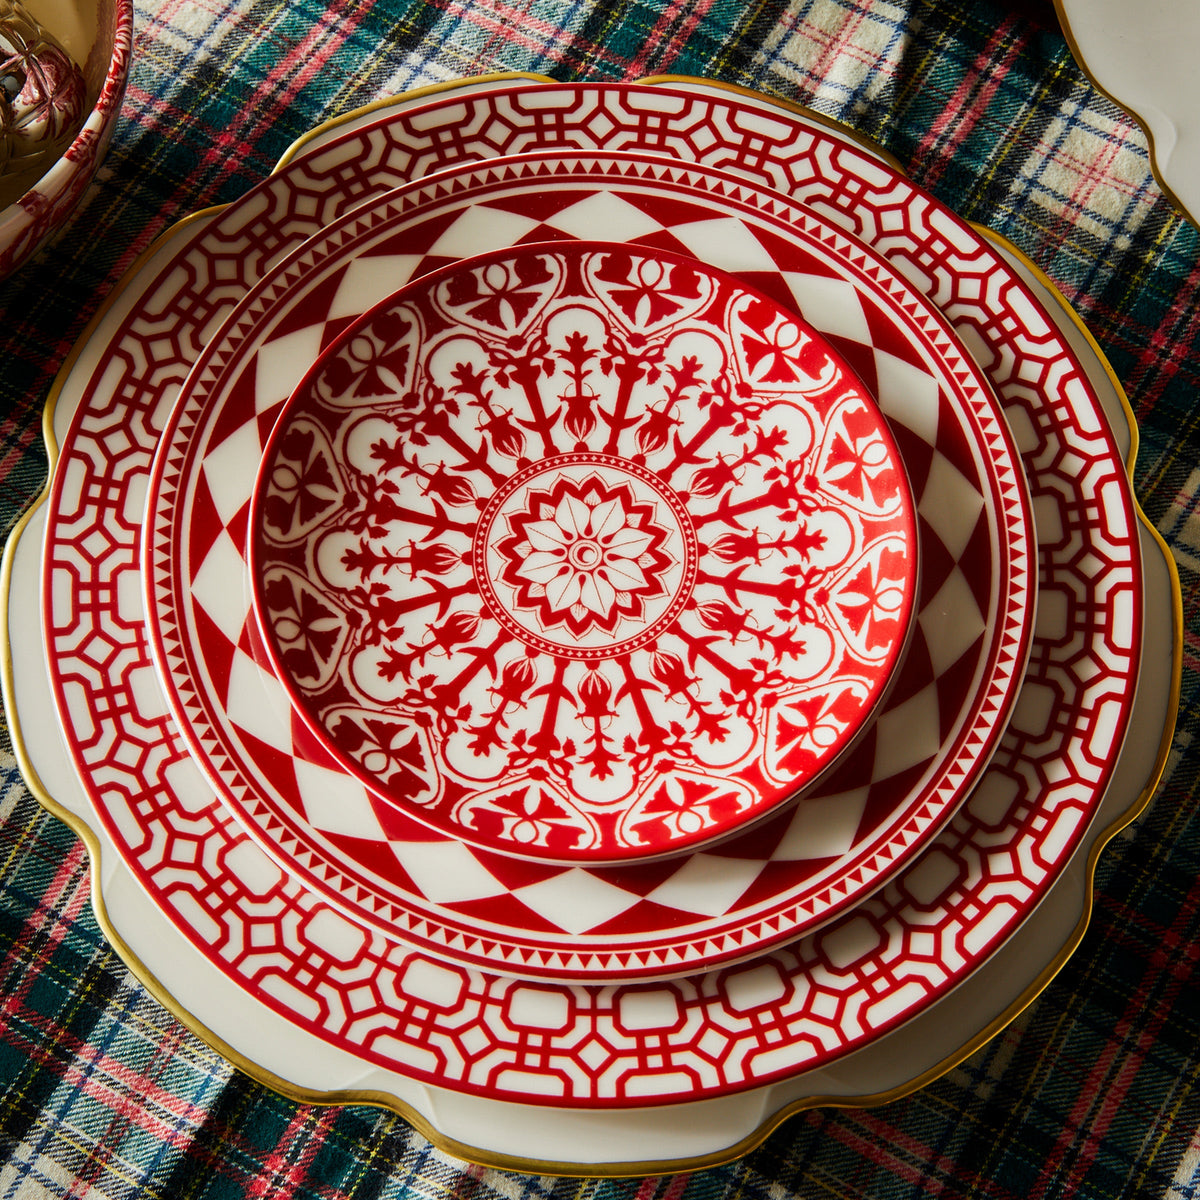 A Fez Crimson Salad Plate on a plaid tablecloth by Caskata Artisanal Home.